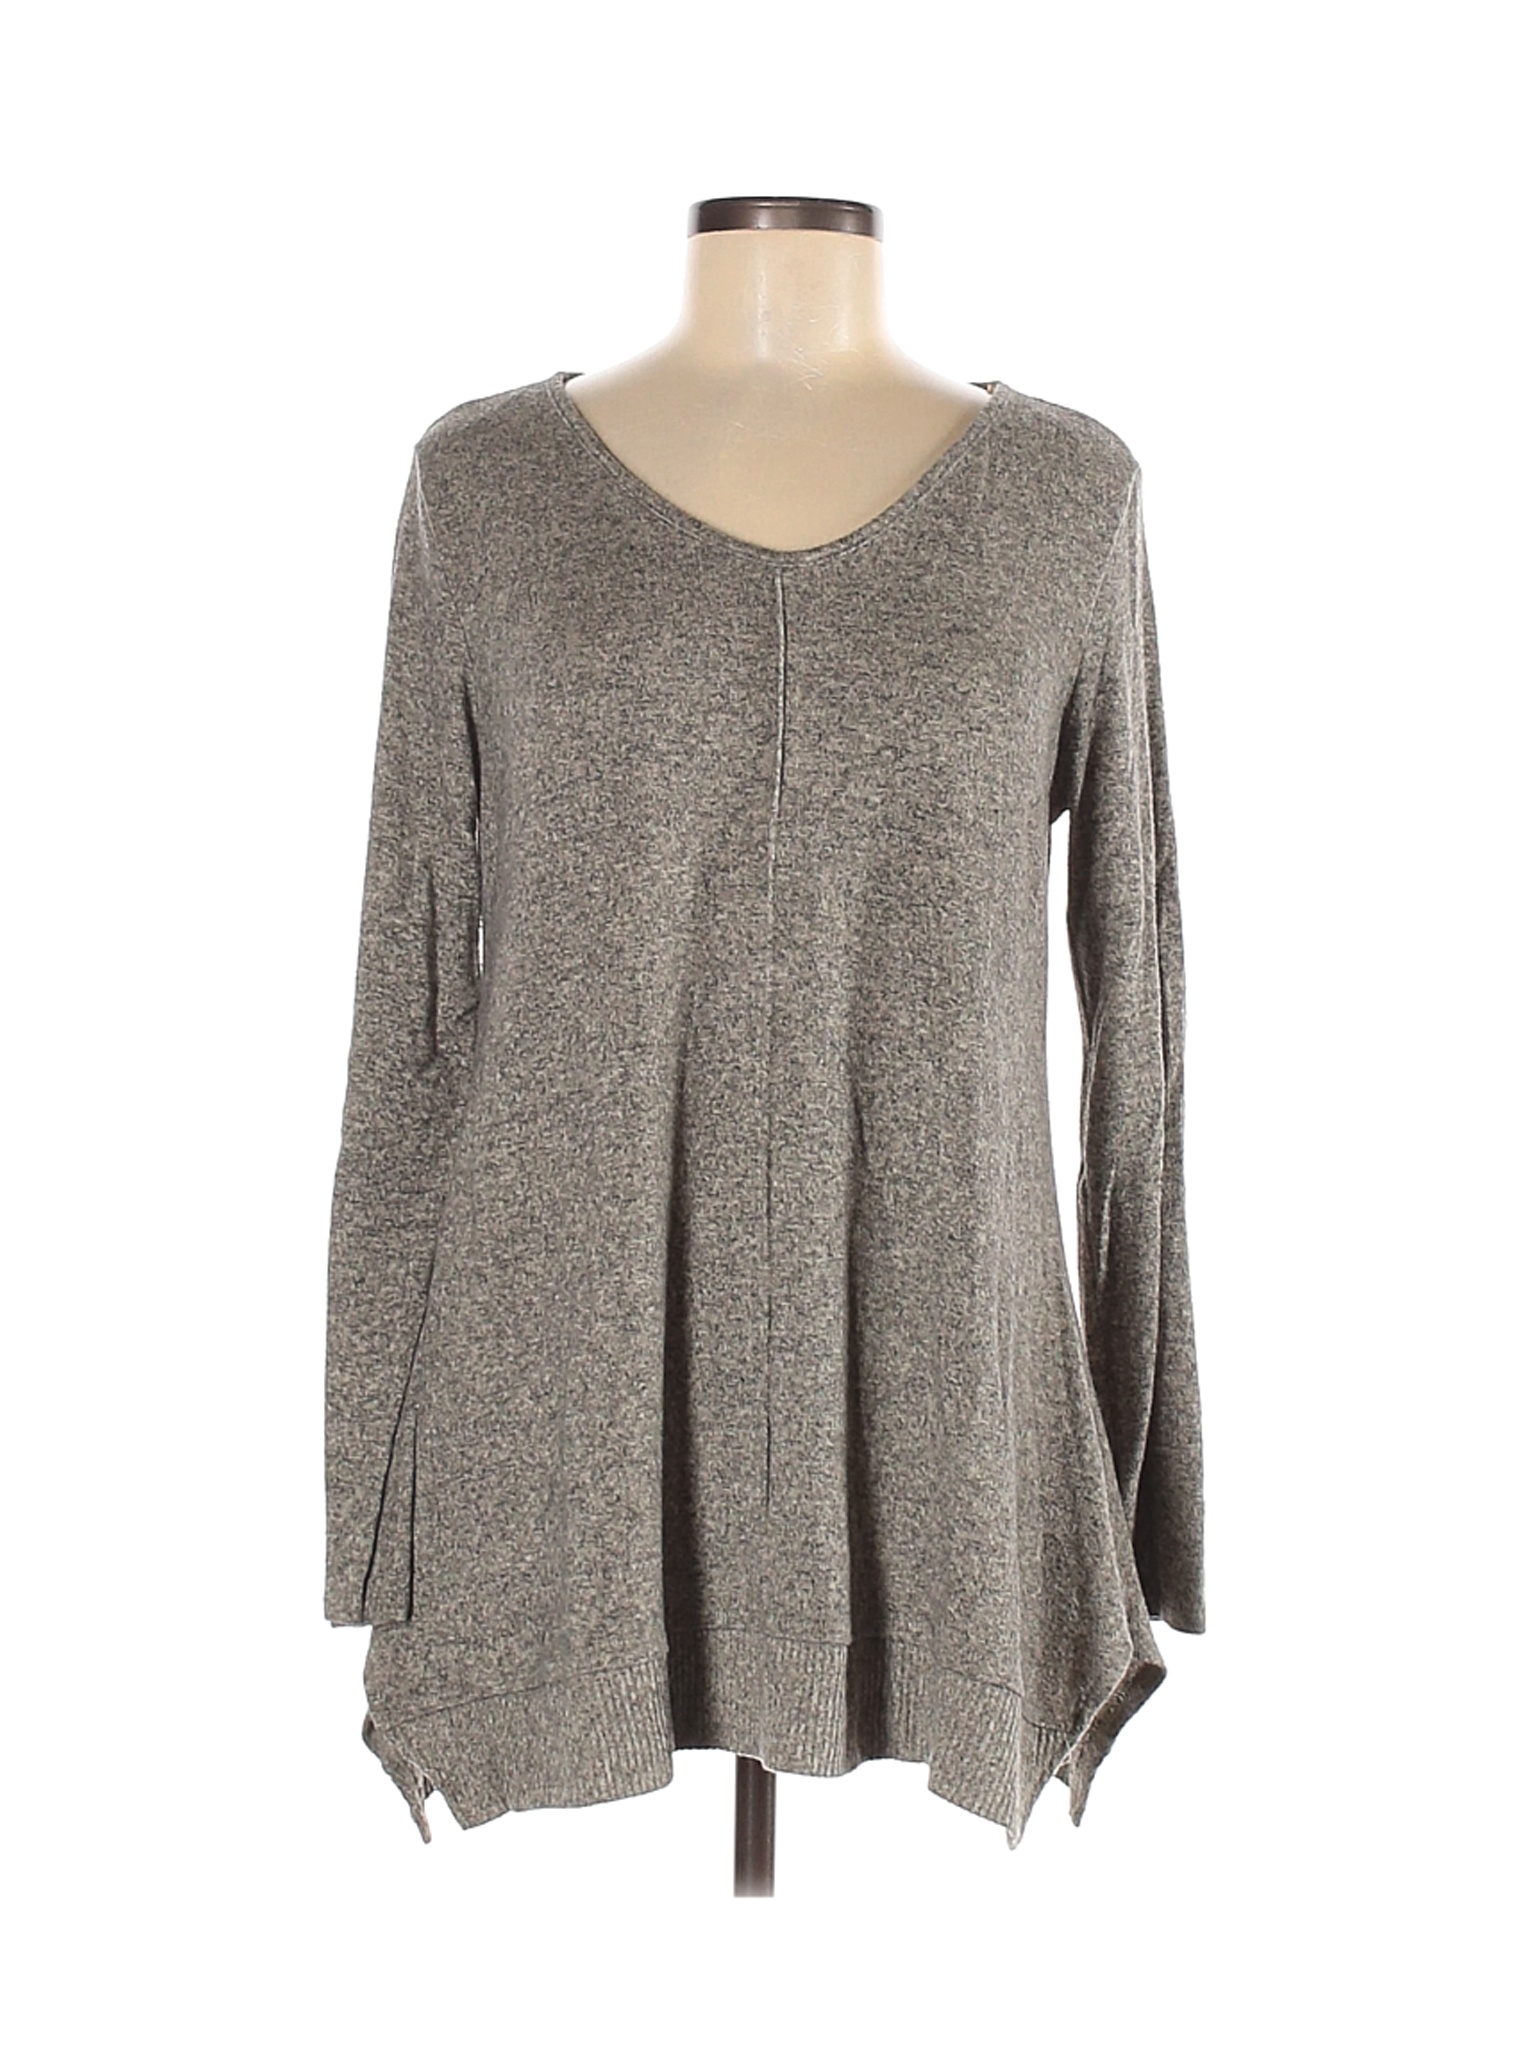 Soft Surroundings Women Gray Pullover Sweater M | eBay